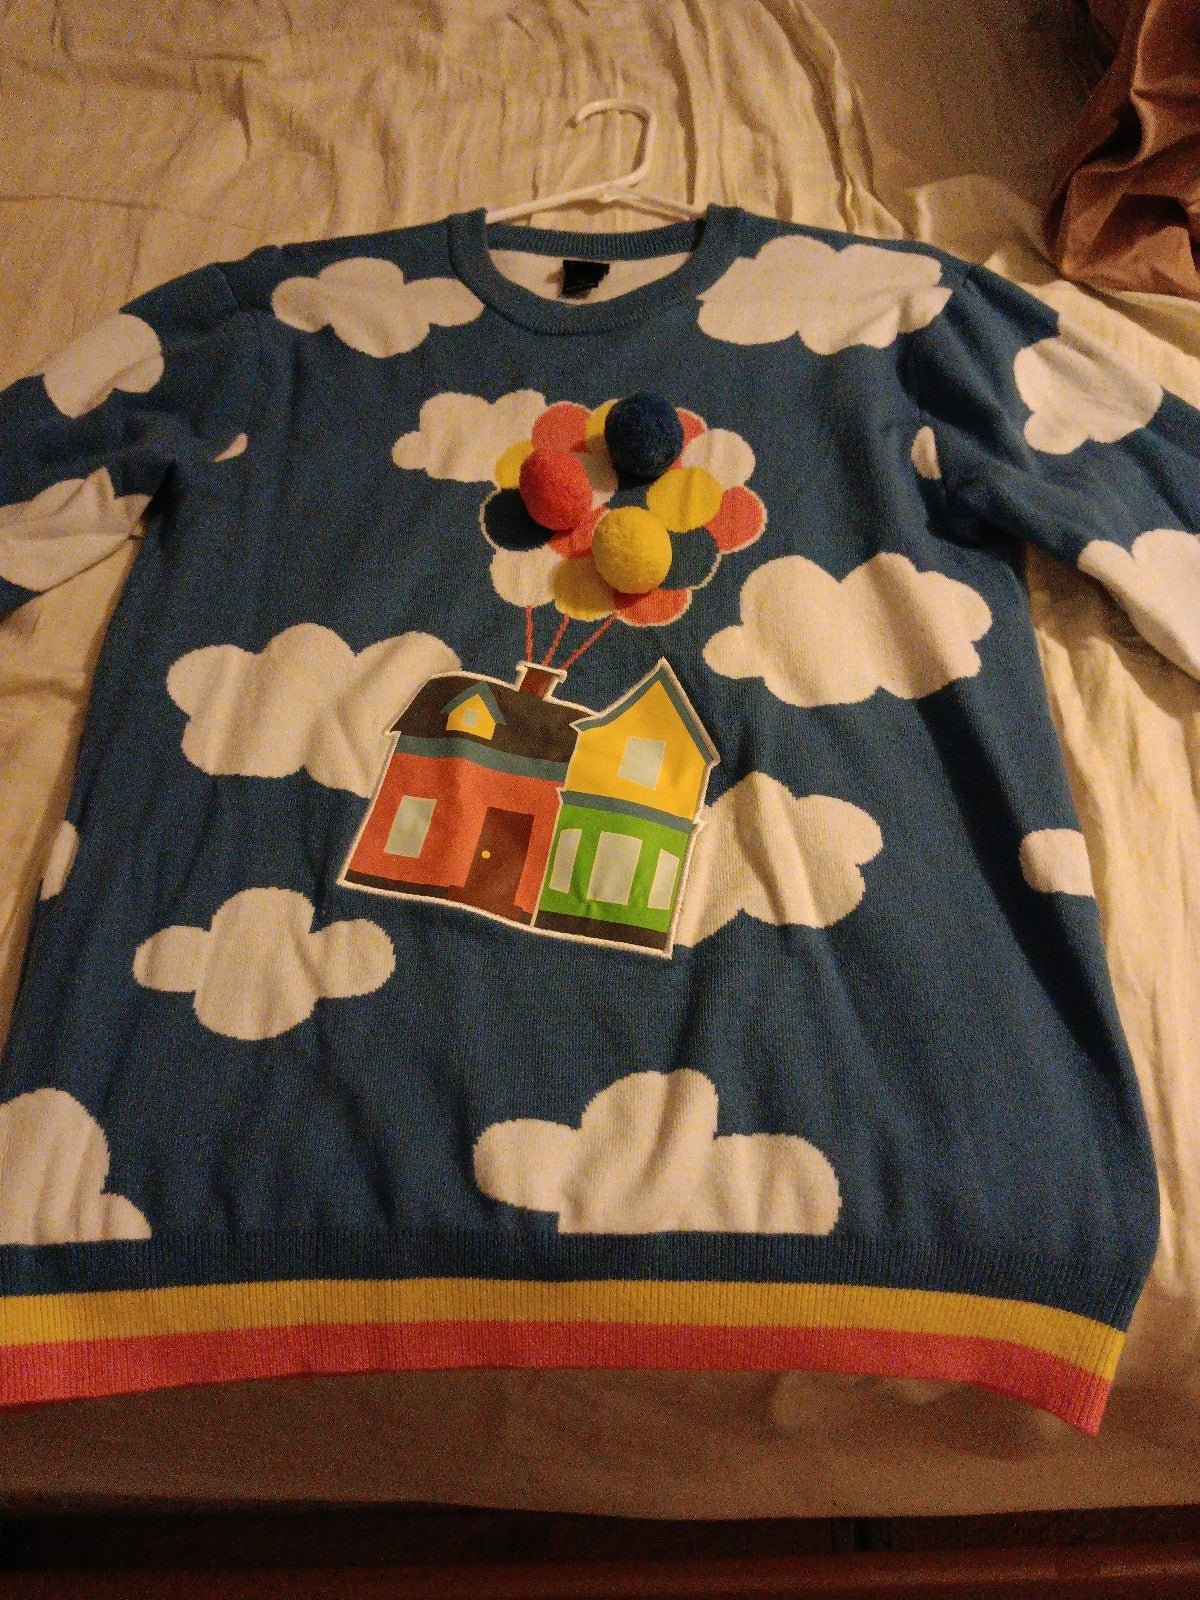 Exclusive Disney Pixar up sweater kHynnK9cw hot sale